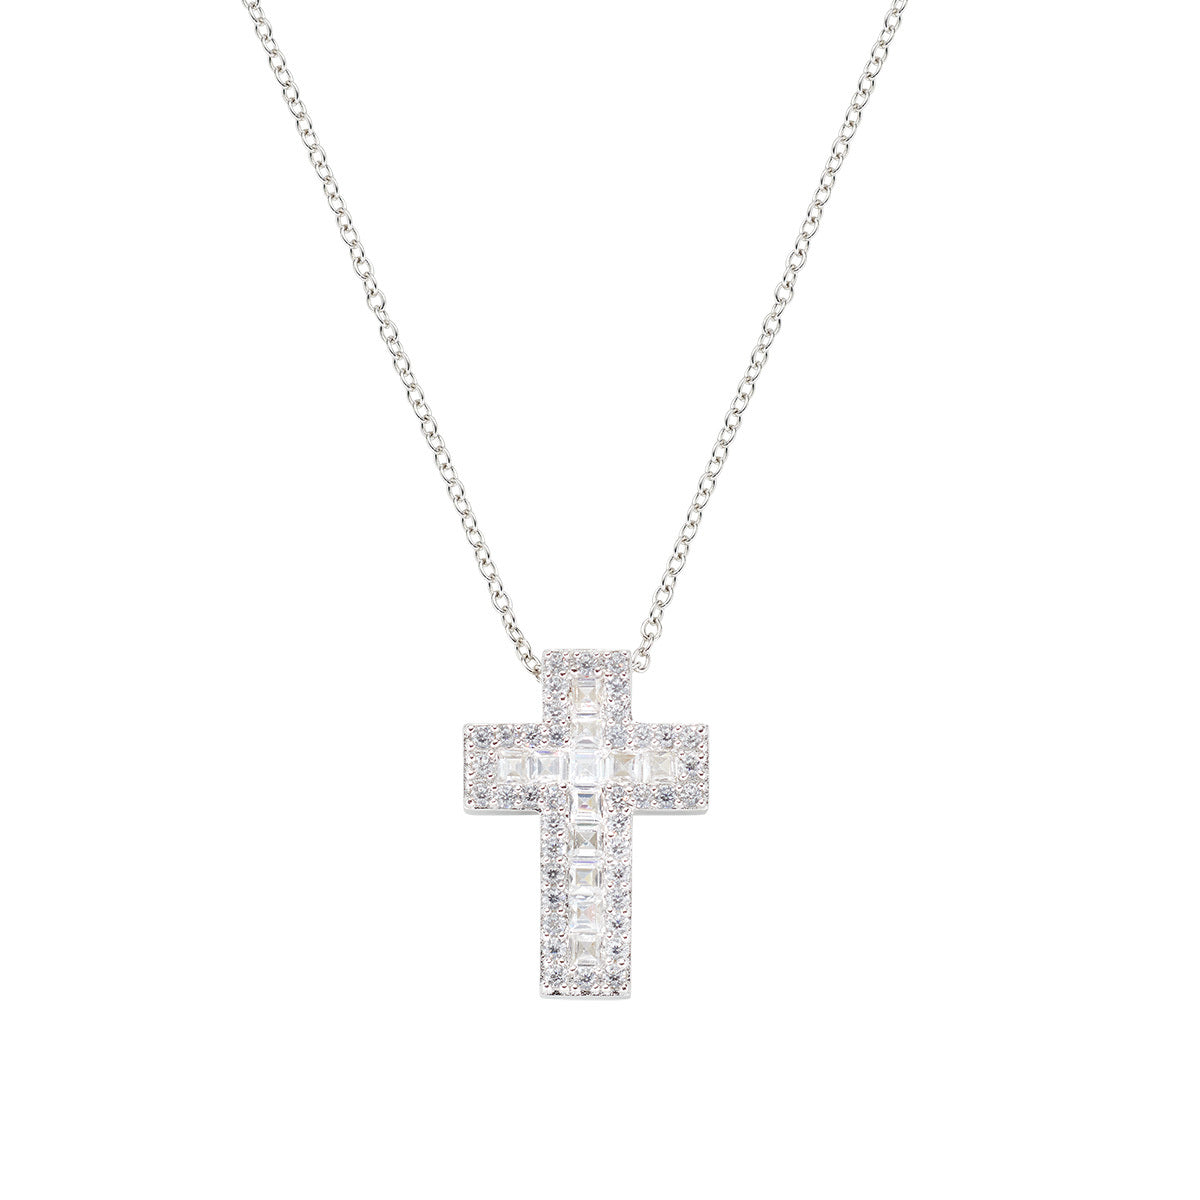 Amen collana croce con zirconi bianchi - CLCRREBBBZ1